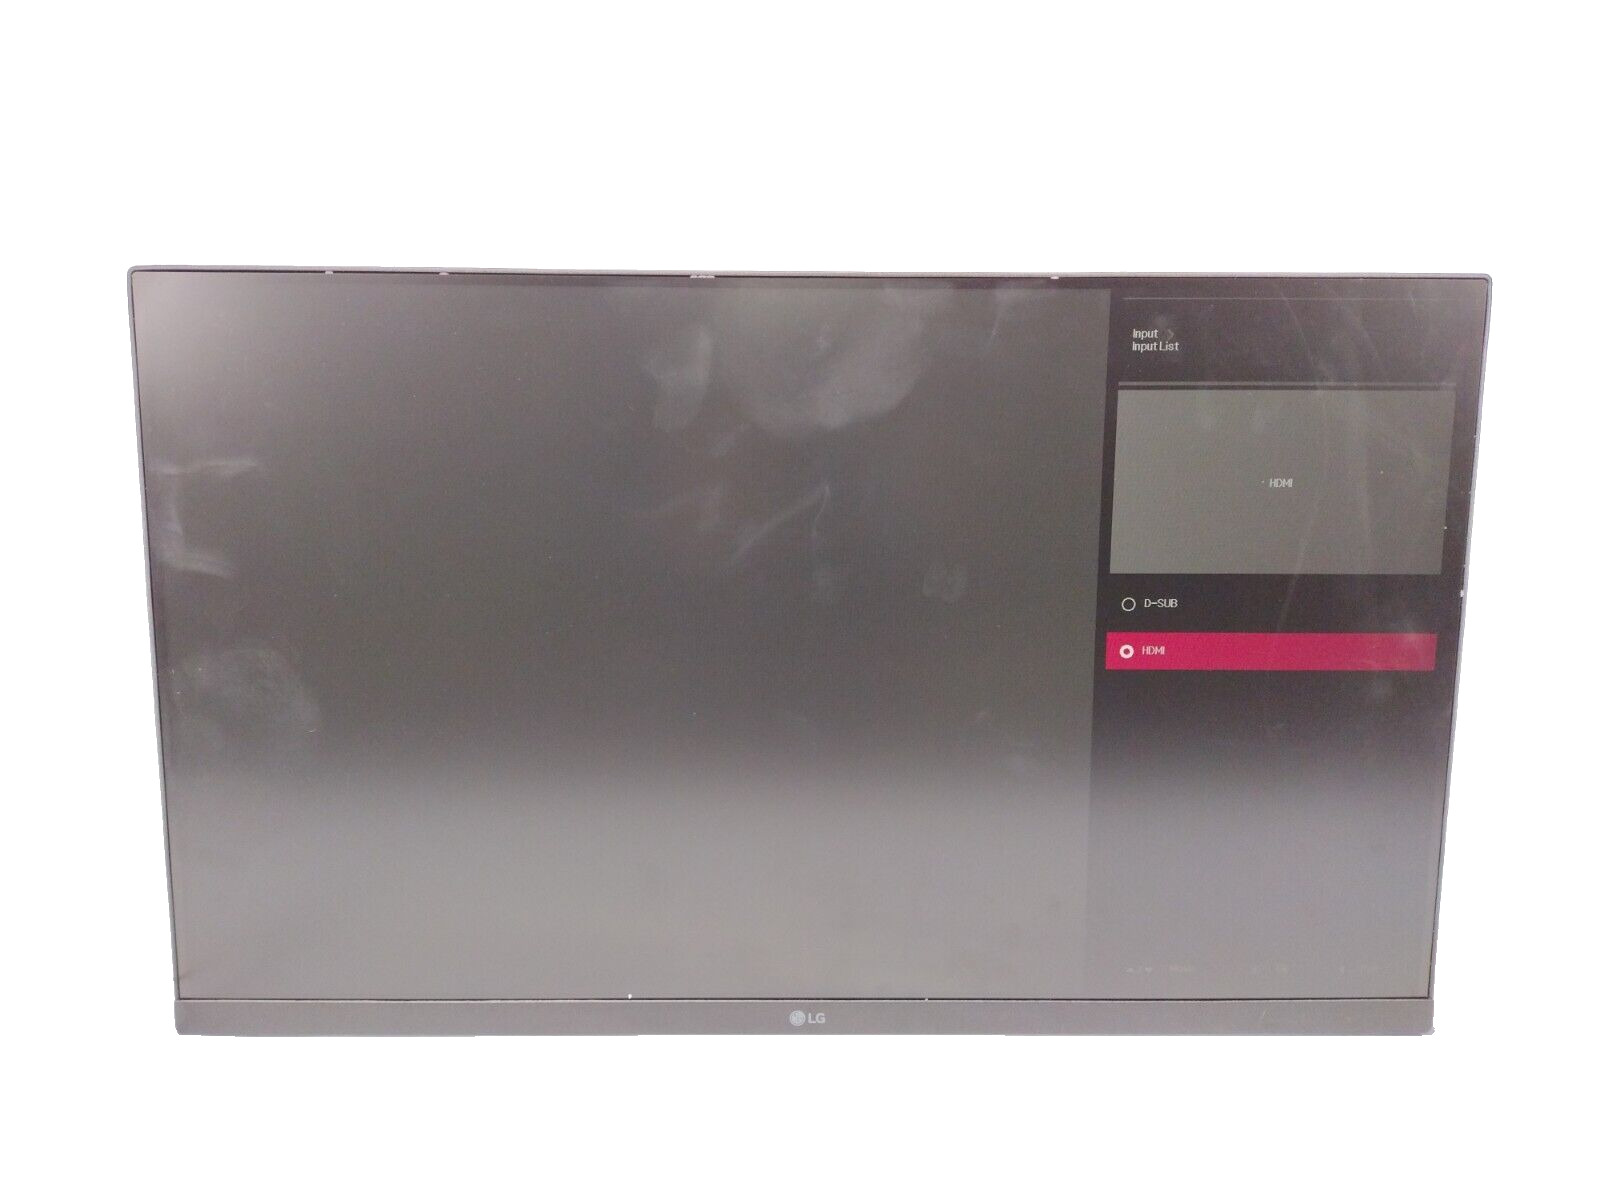 LG 27QN600 27-inch Monitor (50152)